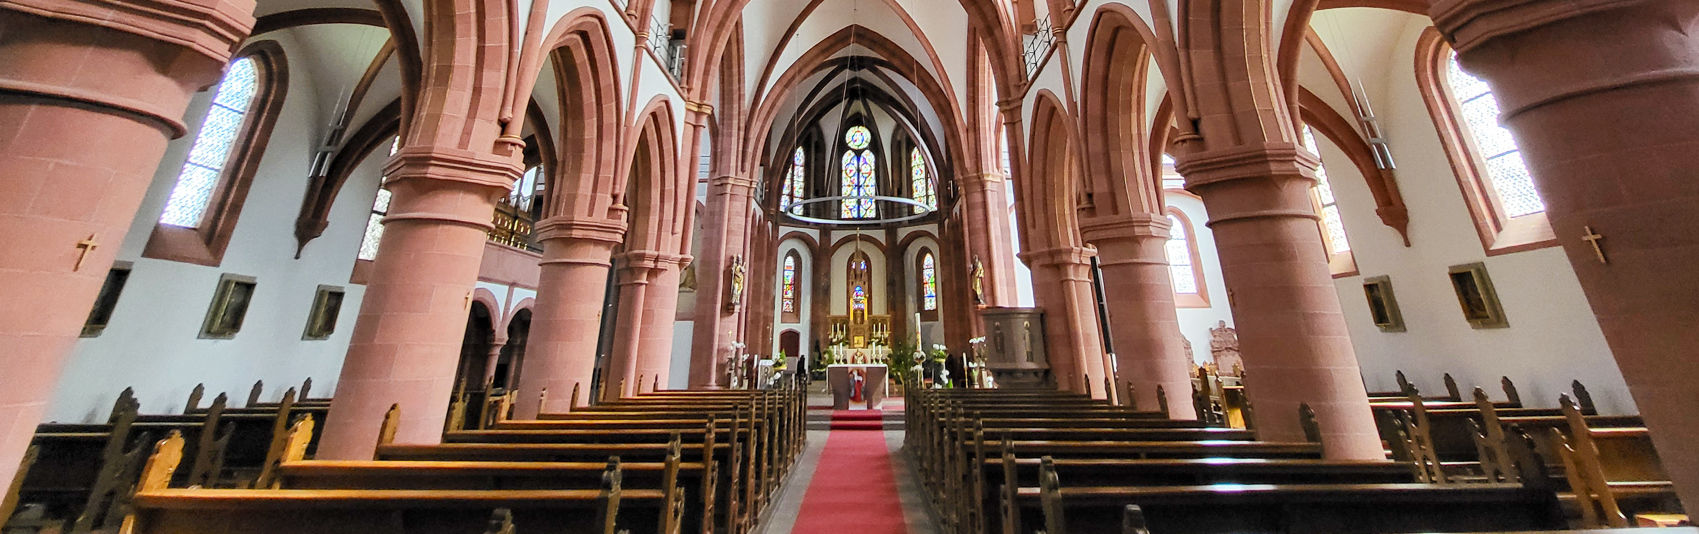 Blick in den Innenraum der Stiftskirche St. Johannes der Täufer.   Foto: Bistum Fulda / Bertram Lenz